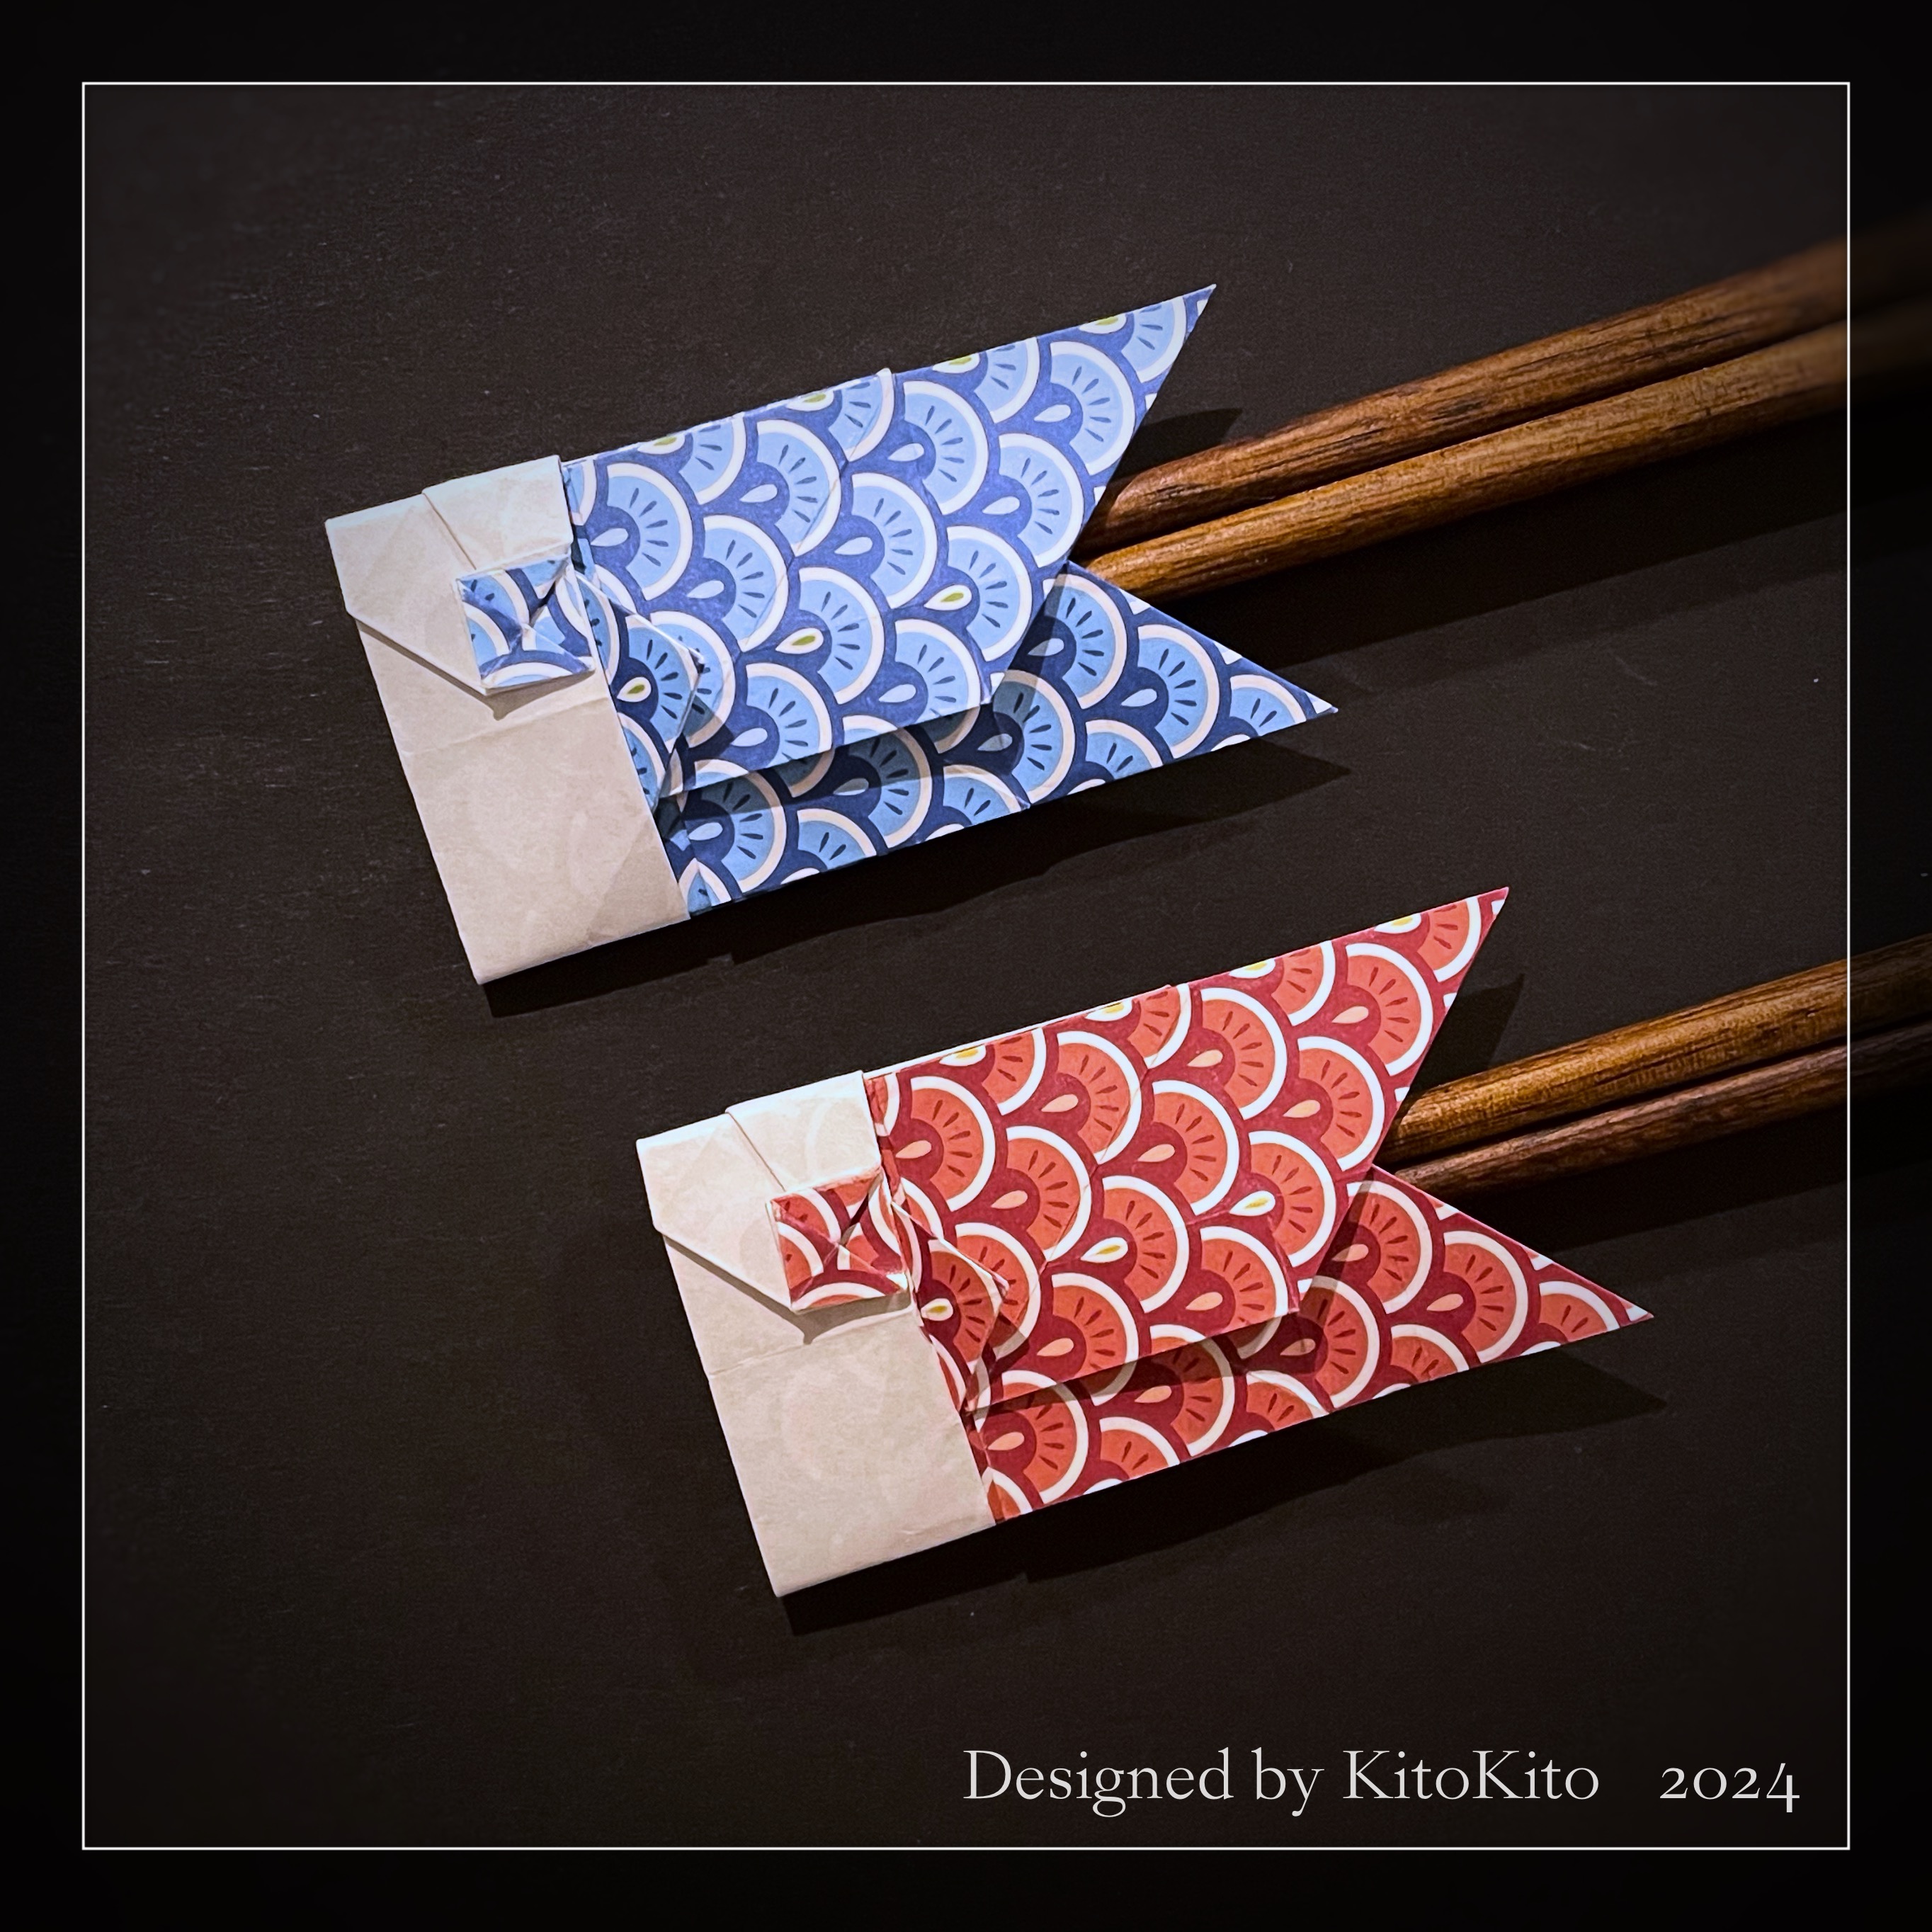 2024/04/30(Tue) 06:17「Koinobori (Carp streamer) chopstick wrappe / こいのぼりの箸袋  」KitoKito
（創作者 Author：KitoKito,　製作者 Folder：KitoKito,　出典 Source：）
 I created a Koinobori (Carp streamer) chopstick wrapper. These can also be used as finger puppets.